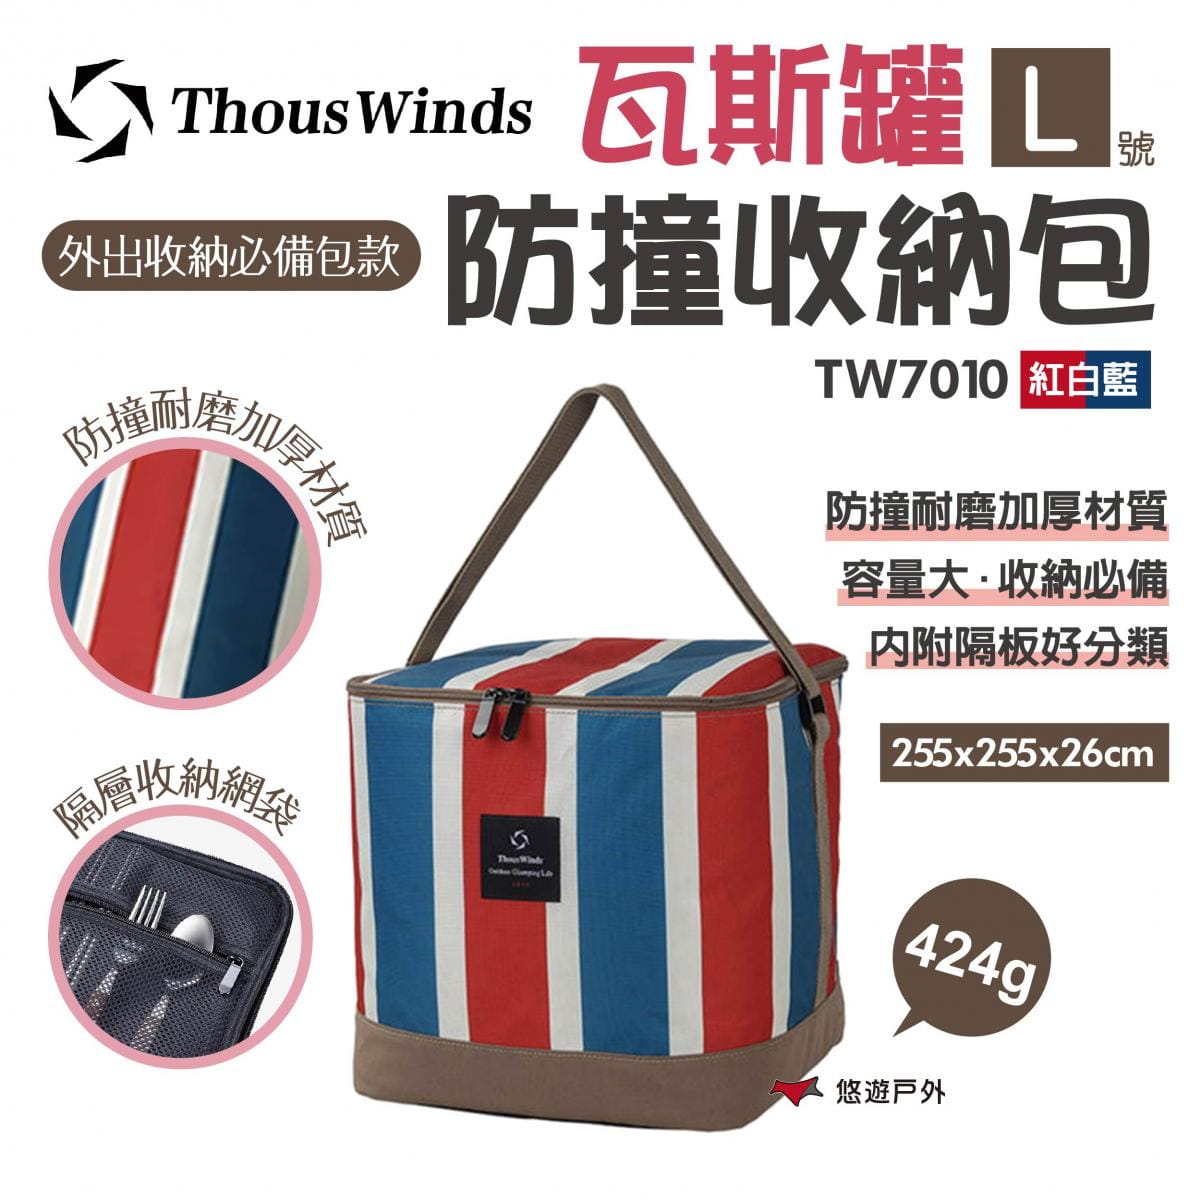 【Thous Winds】瓦斯罐防撞收納包-L 紅白藍 TW7010-C 悠遊戶外 1